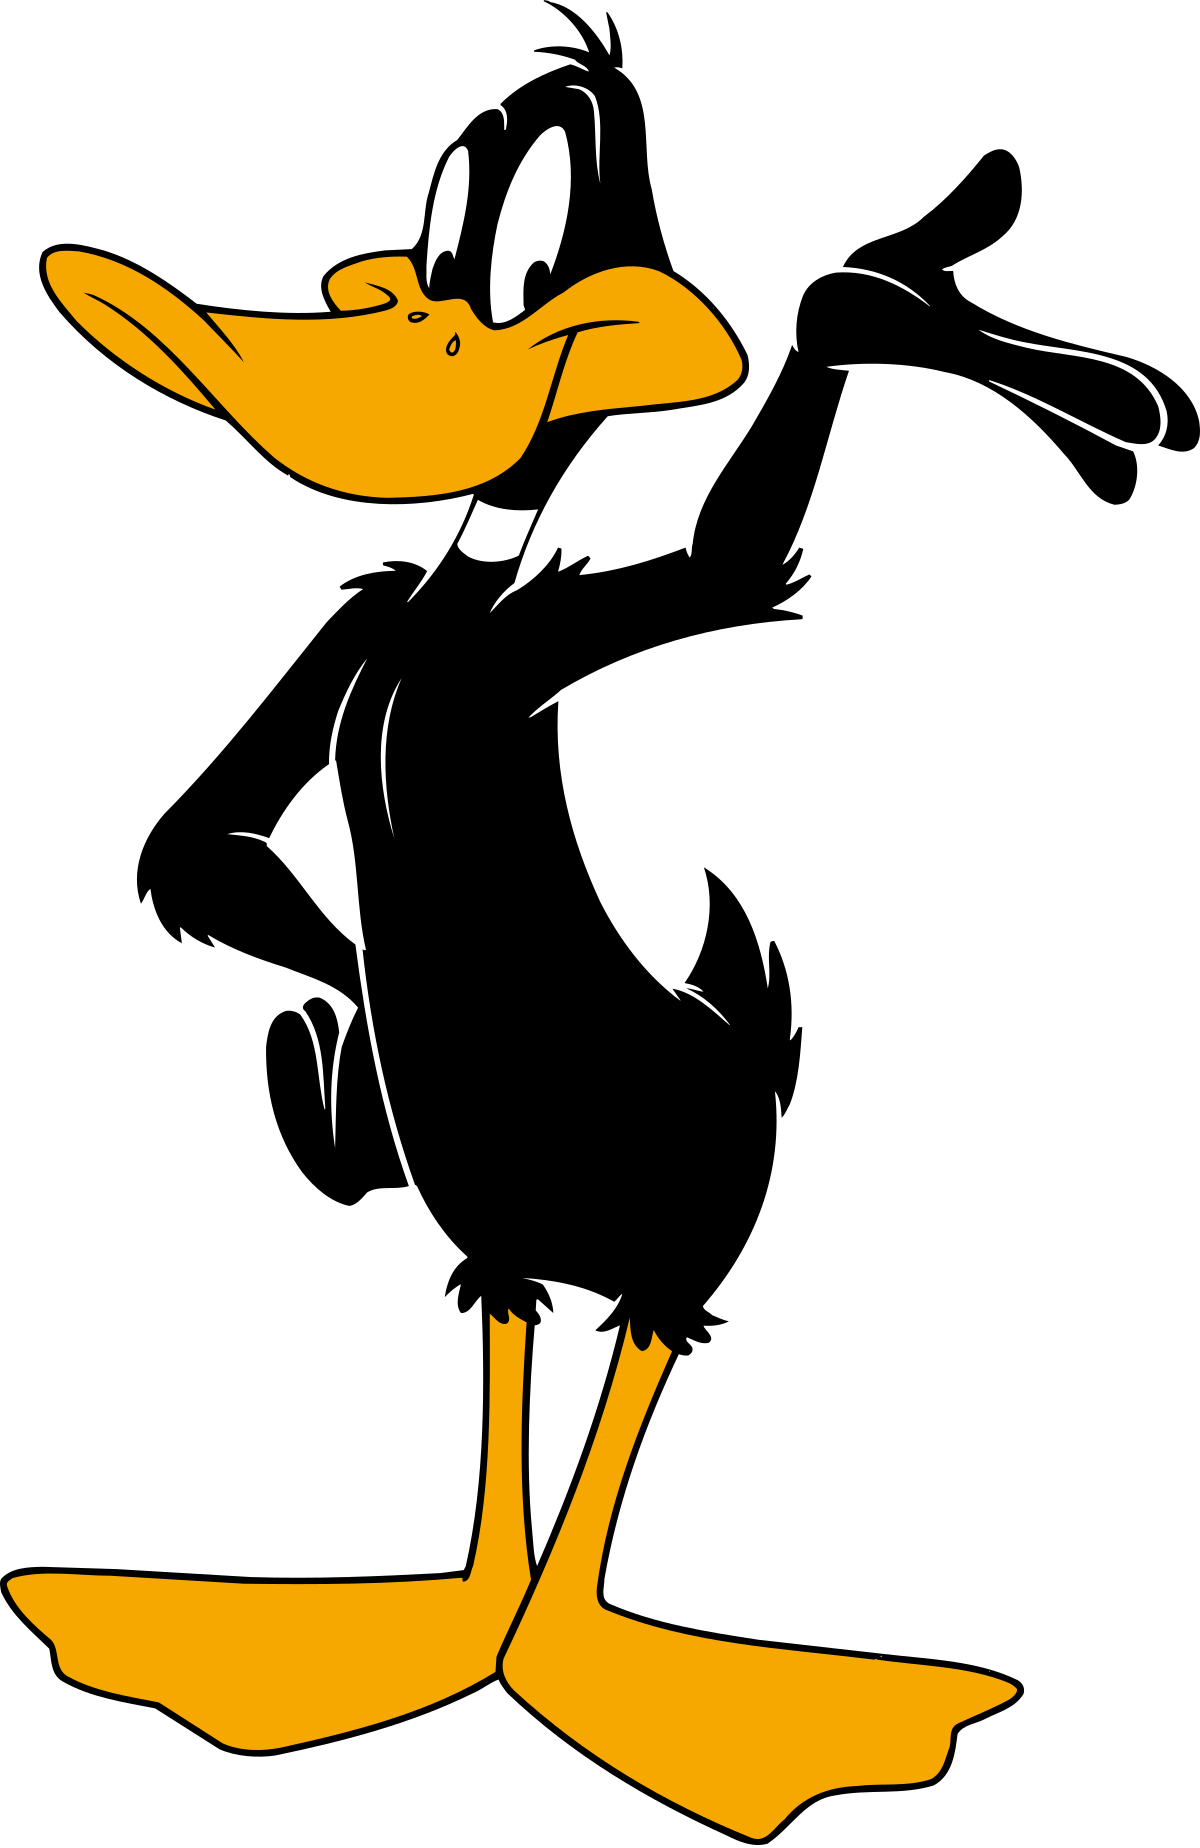 Daffy duck wikipedia . Ducks clipart thumbs up